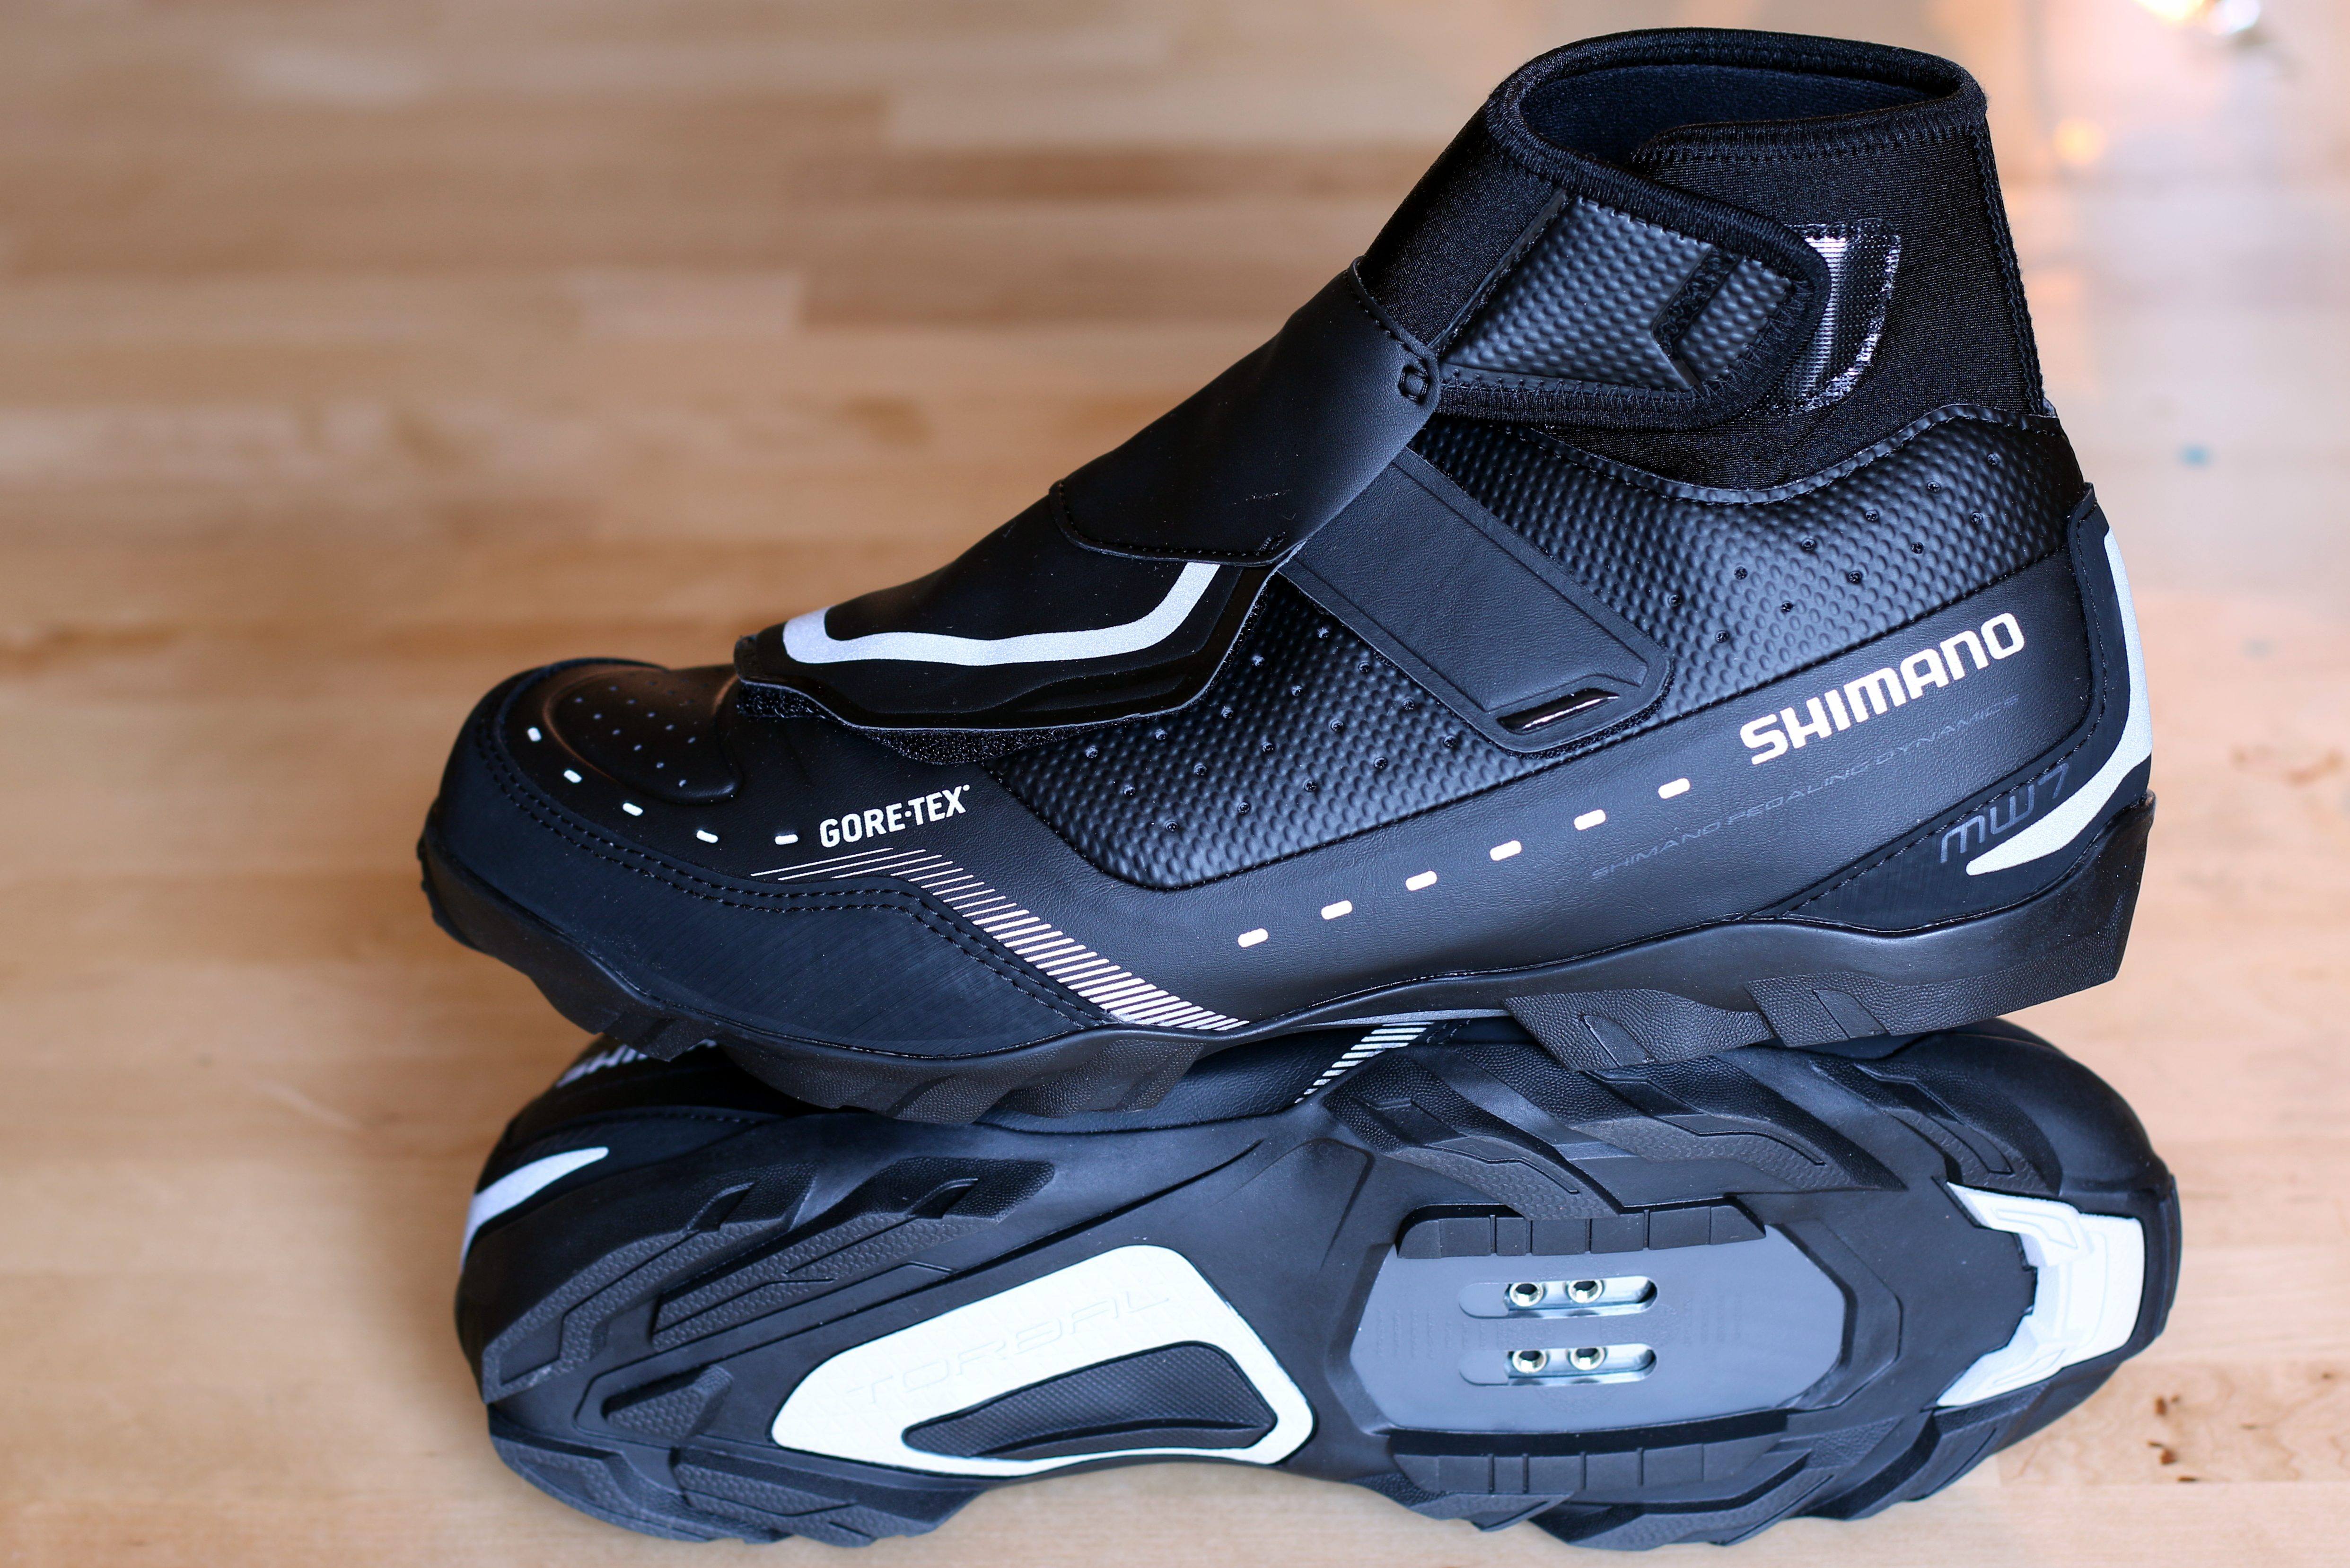 Review: Shimano MW7 Gore-Tex SPD shoes | road.cc